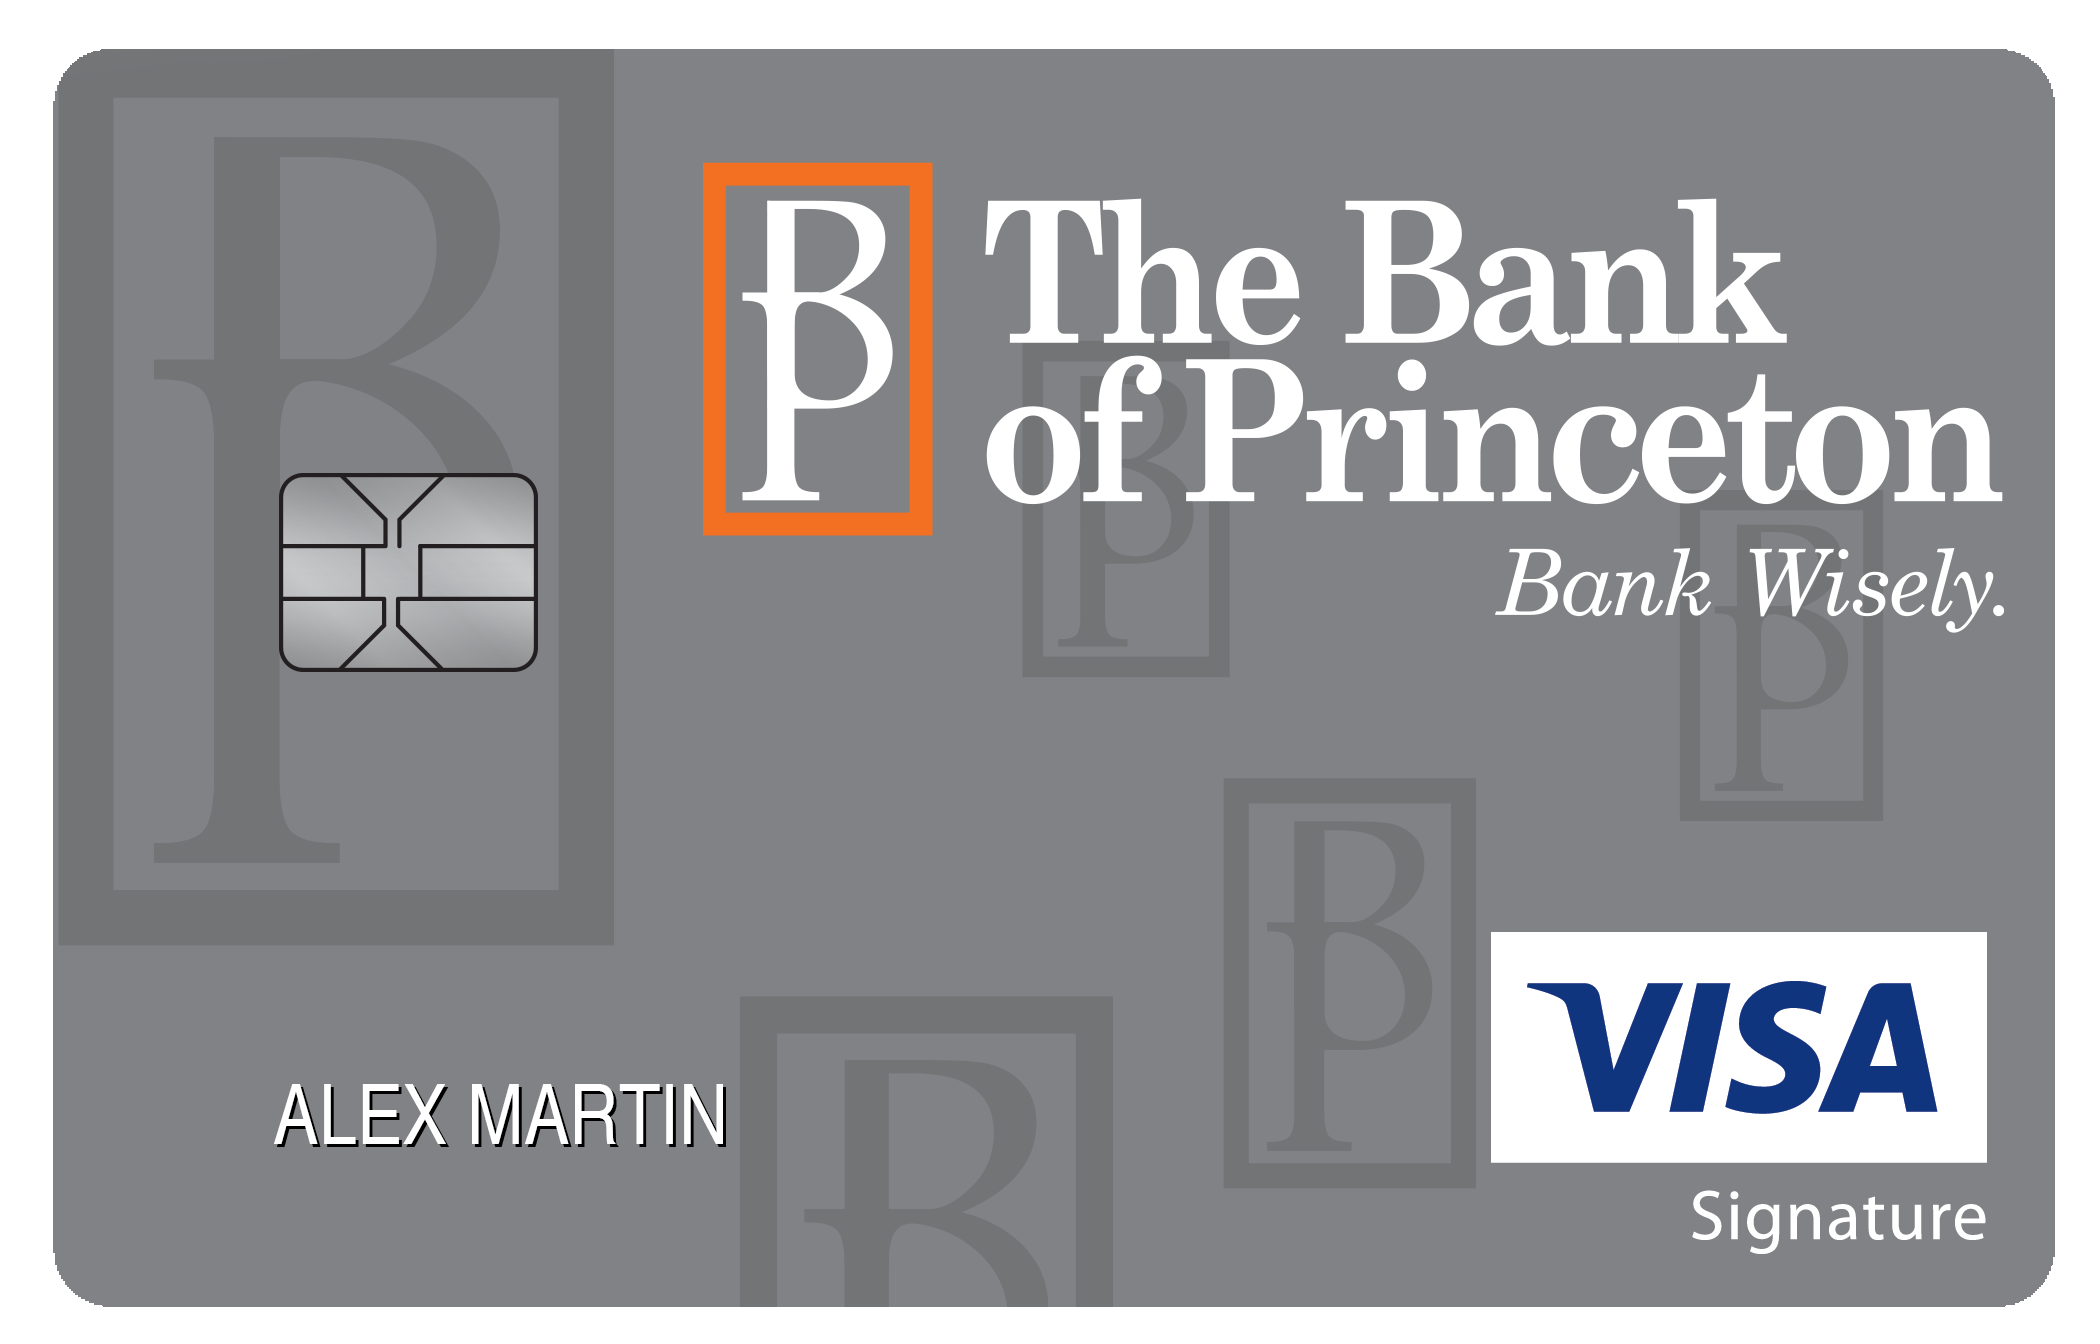 The Bank of Princeton Max Cash Preferred Card